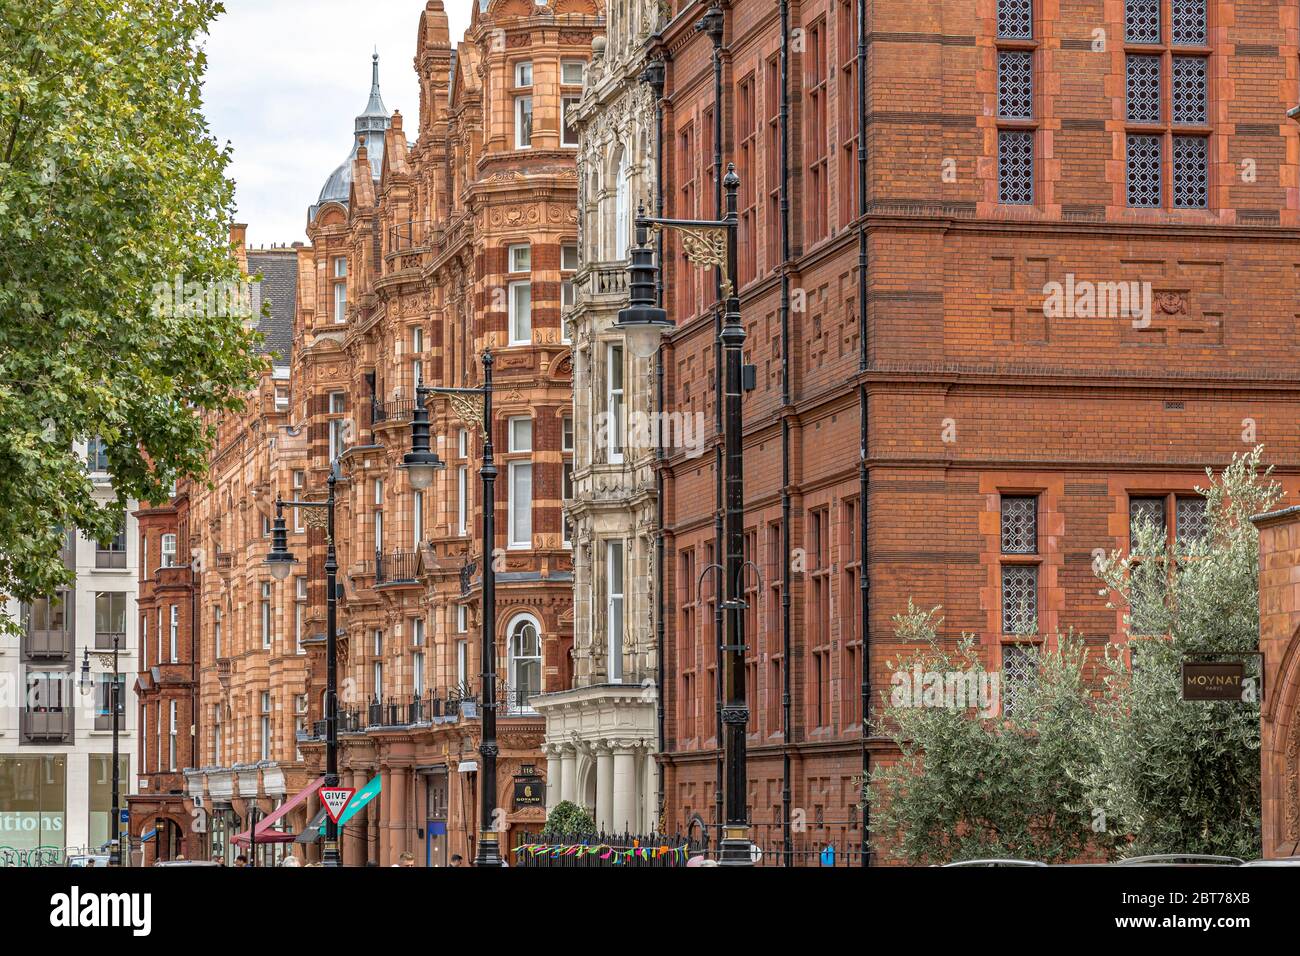 Arquitectura de estilo Reina Ana de Mount Street, una prestigiosa calle este-oeste en Mayfair, Londres W1 Foto de stock